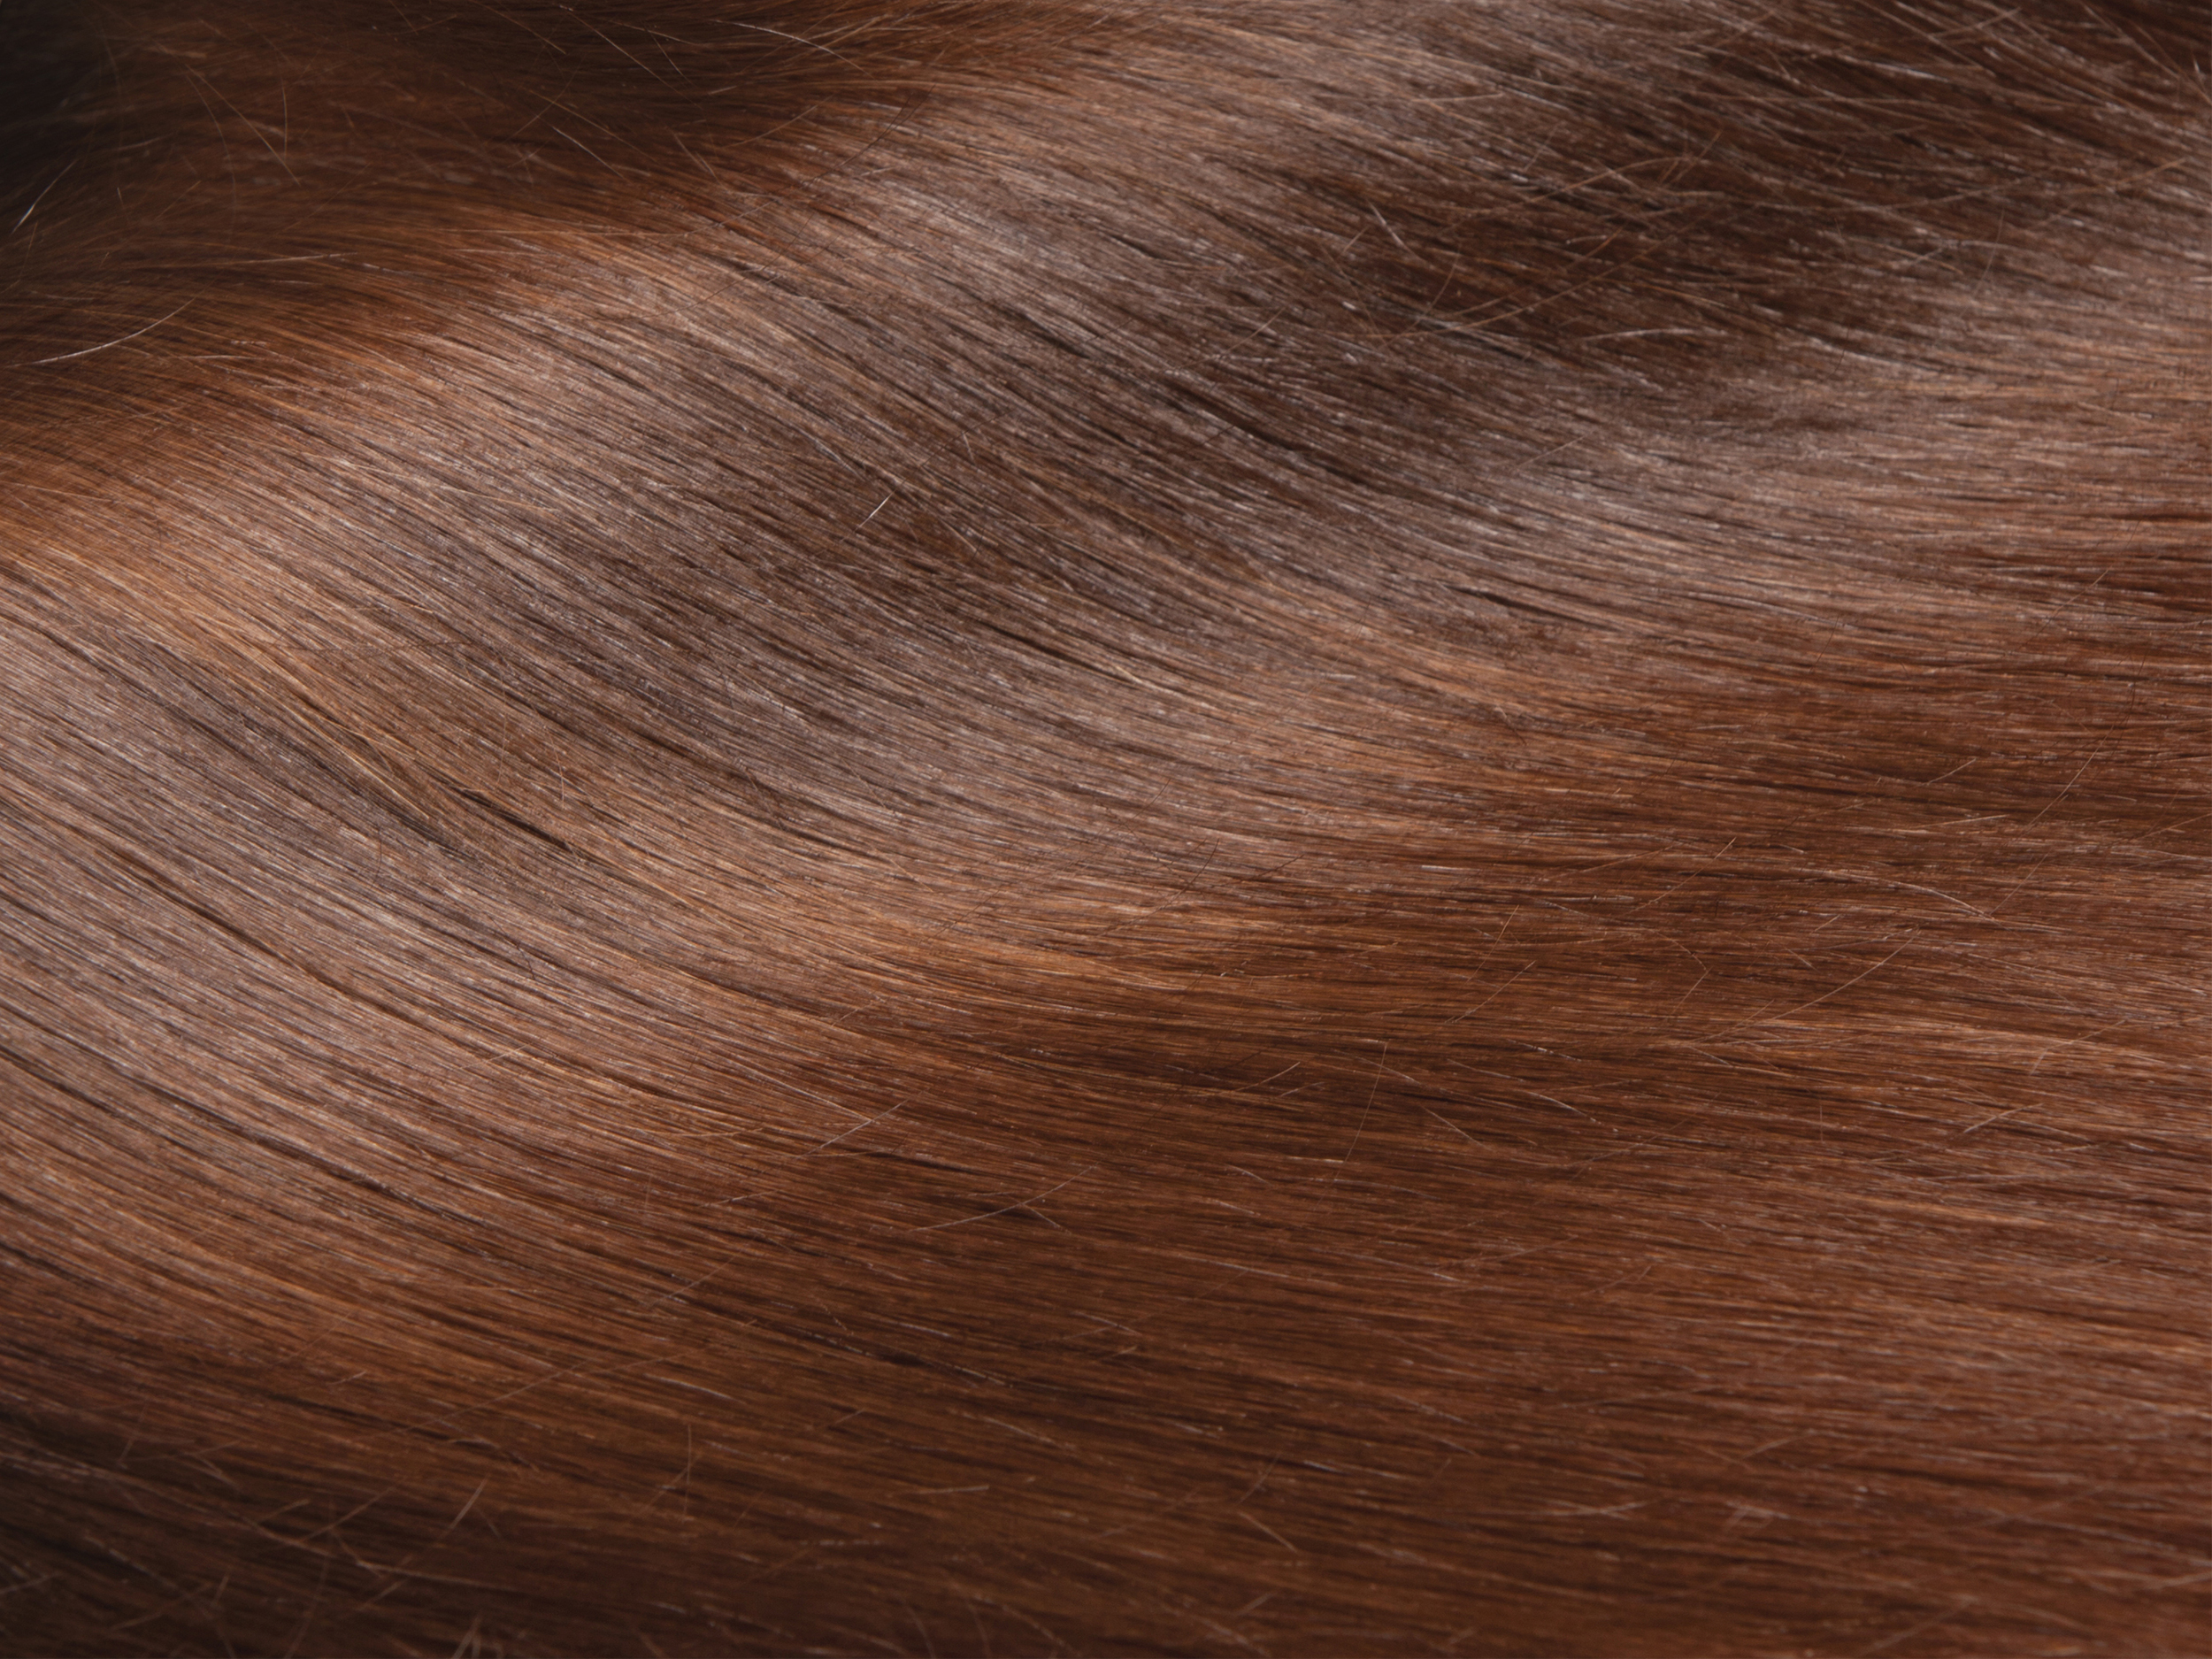 Hair Texture PNG Images Transparent Hair Texture Image Download  PNGitem